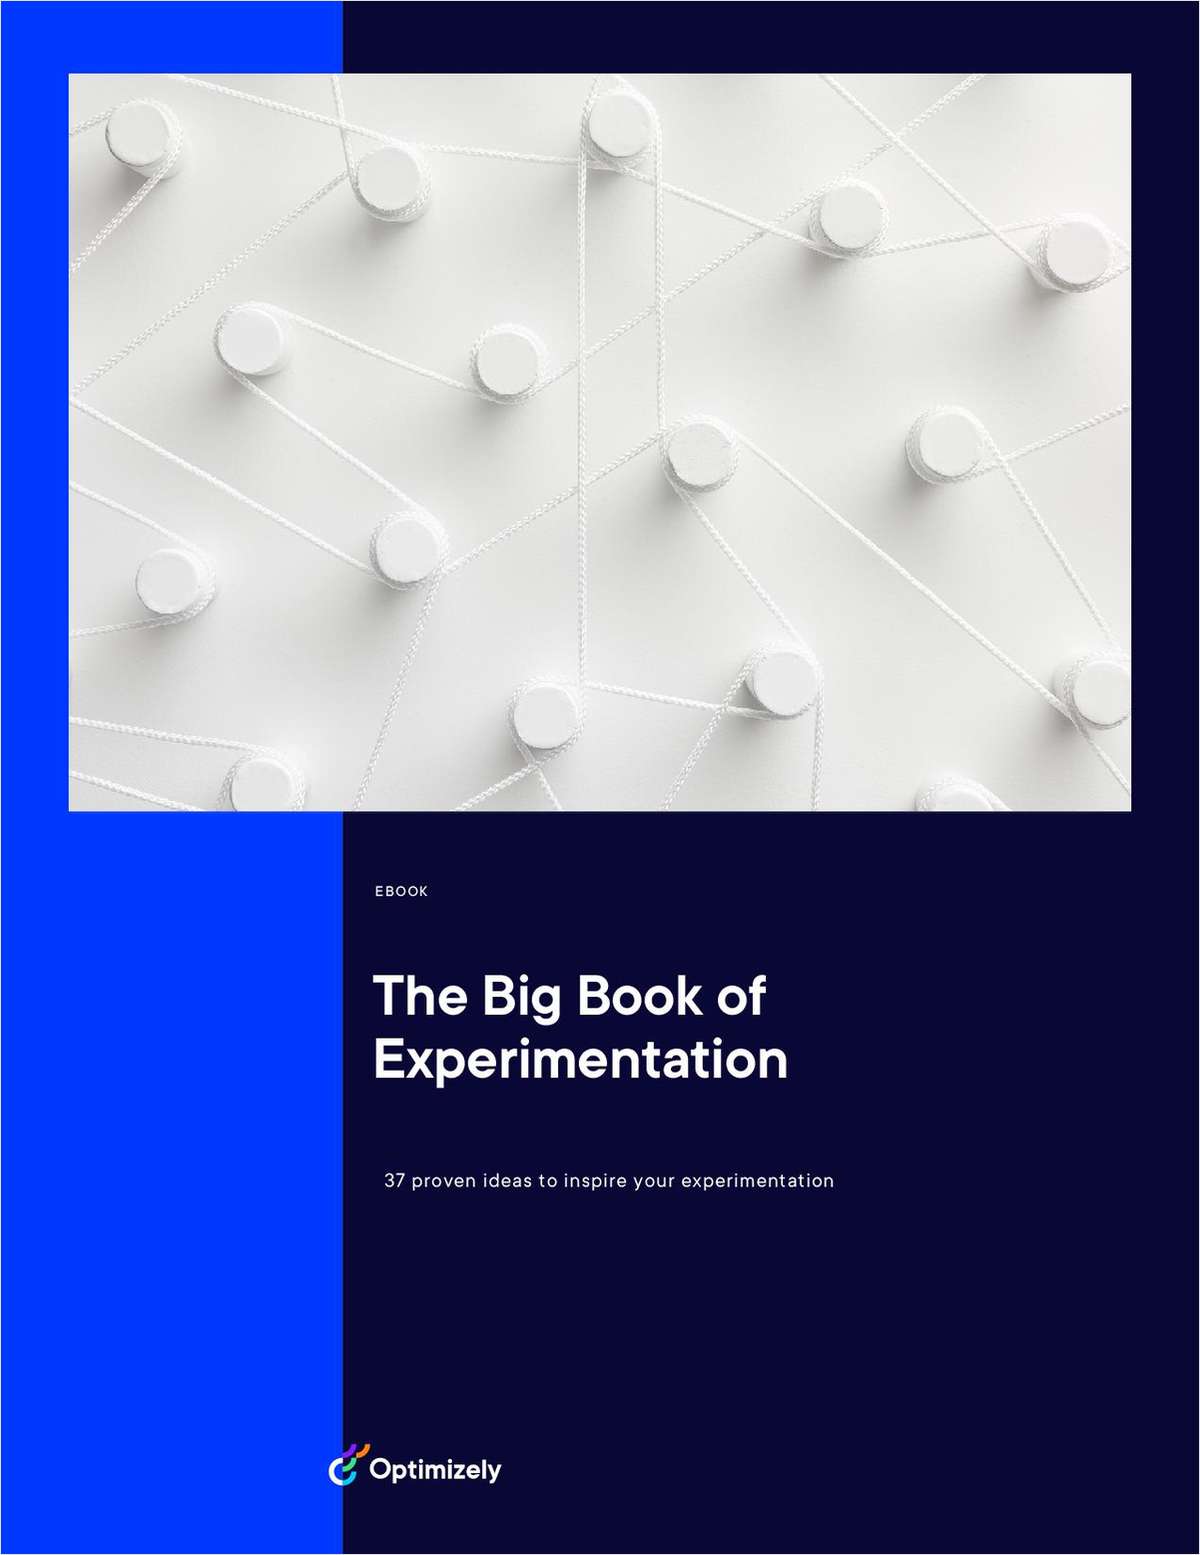 Big Book of Experimentation